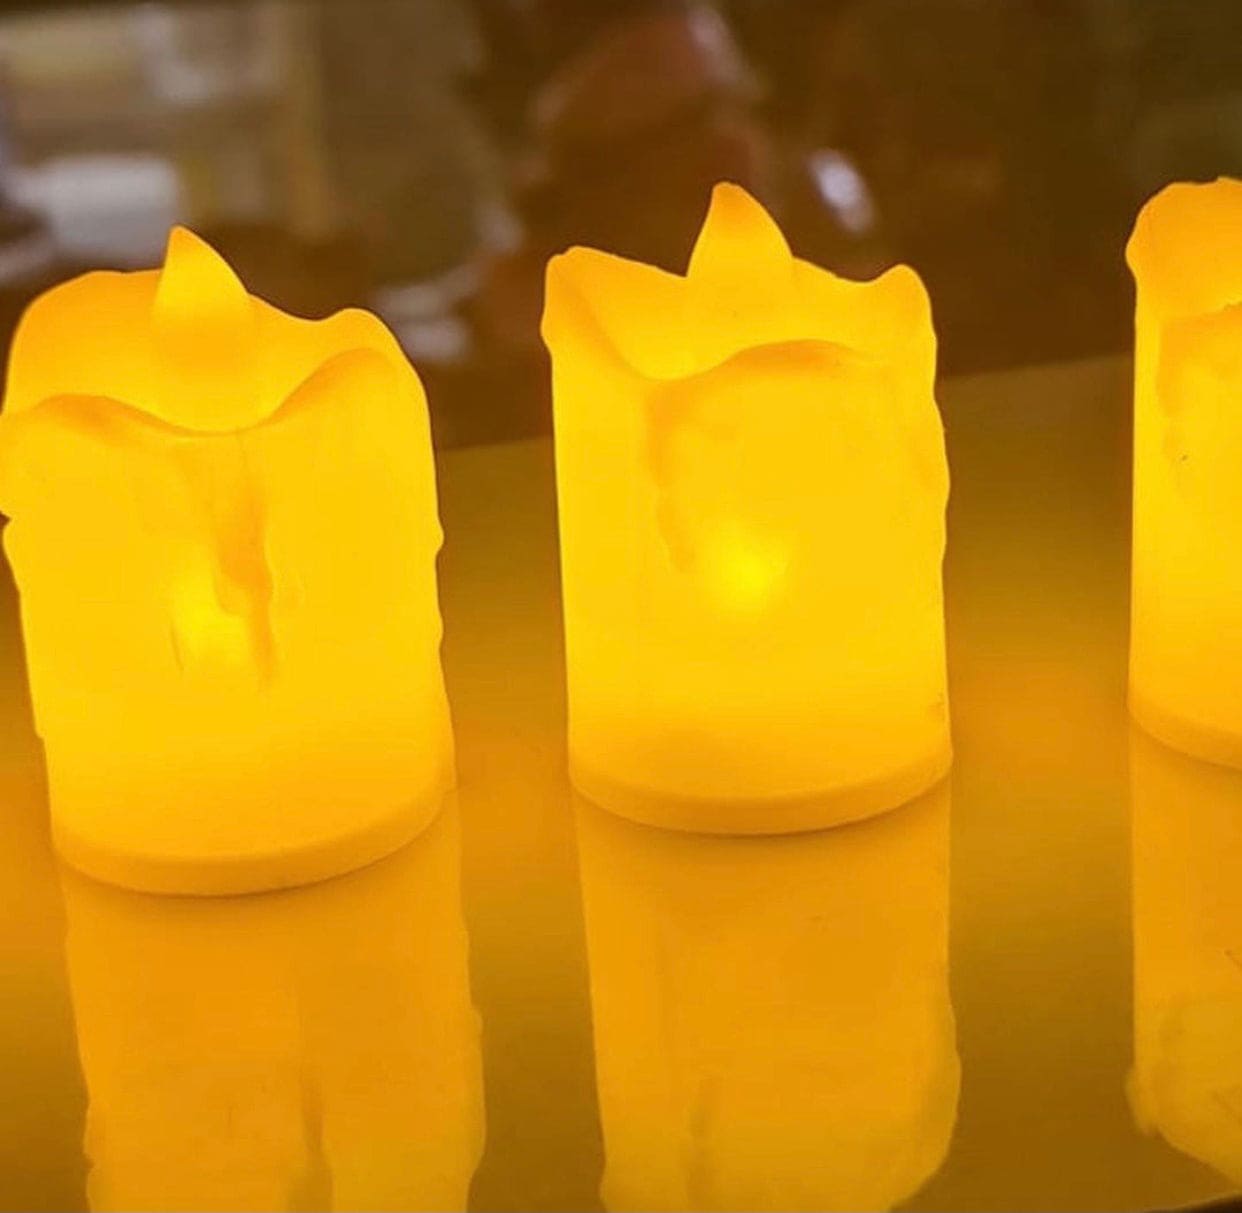 Flameless LED Tea Light Tea Candles, Flameless Flickering Candel Lamp Lights